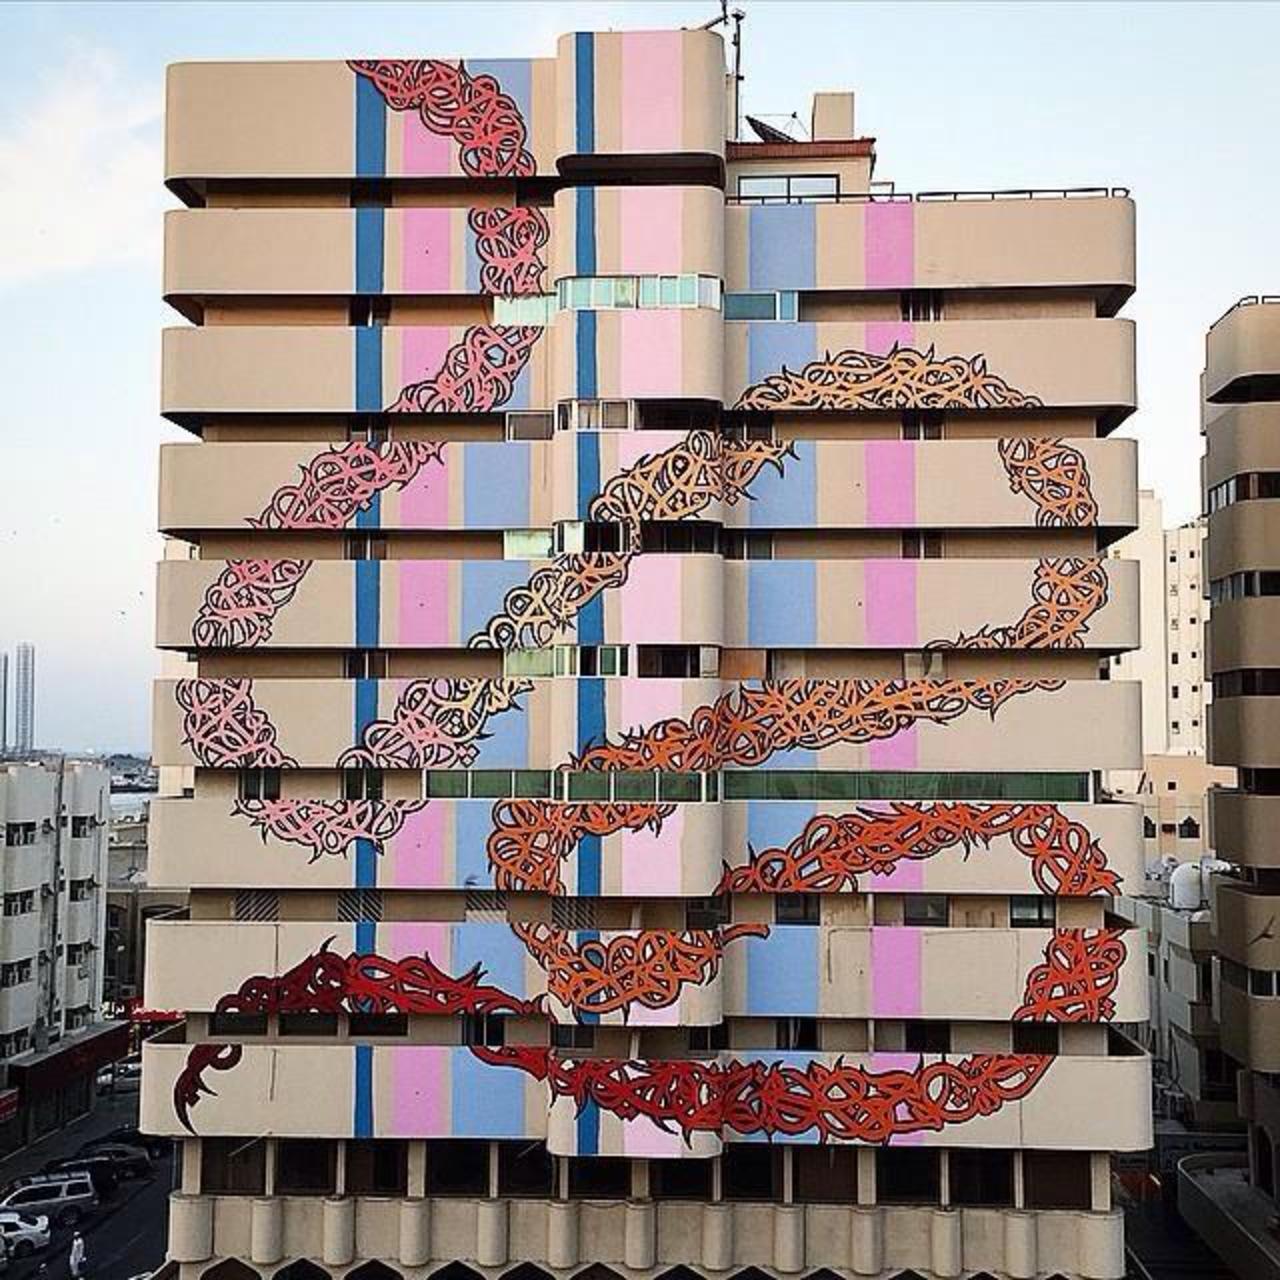 Excellent large scale Street Art mural by the artist 'eL seed'

#art #arte #graffiti #streetart http://t.co/4BWqVaI59P